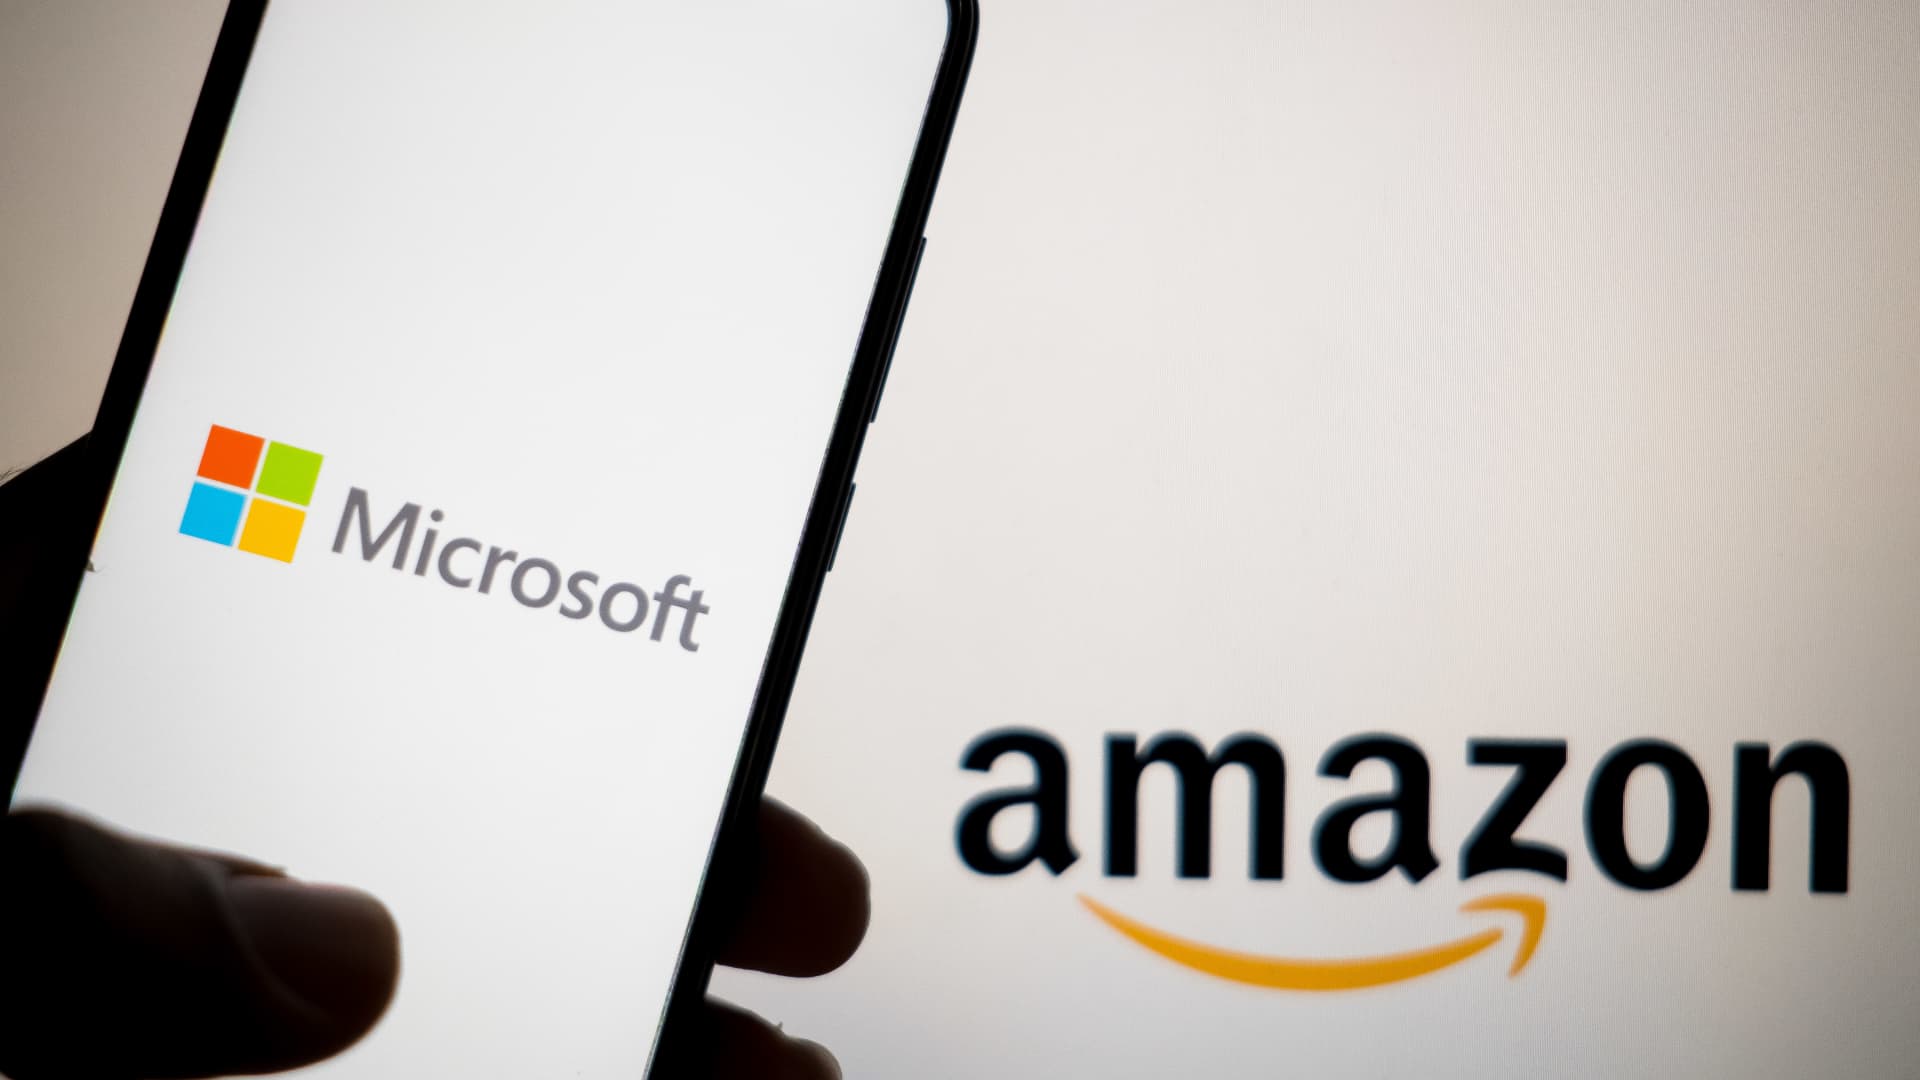 Microsoft, Amazon AI partnerships face scrutiny from British regulators [Video]